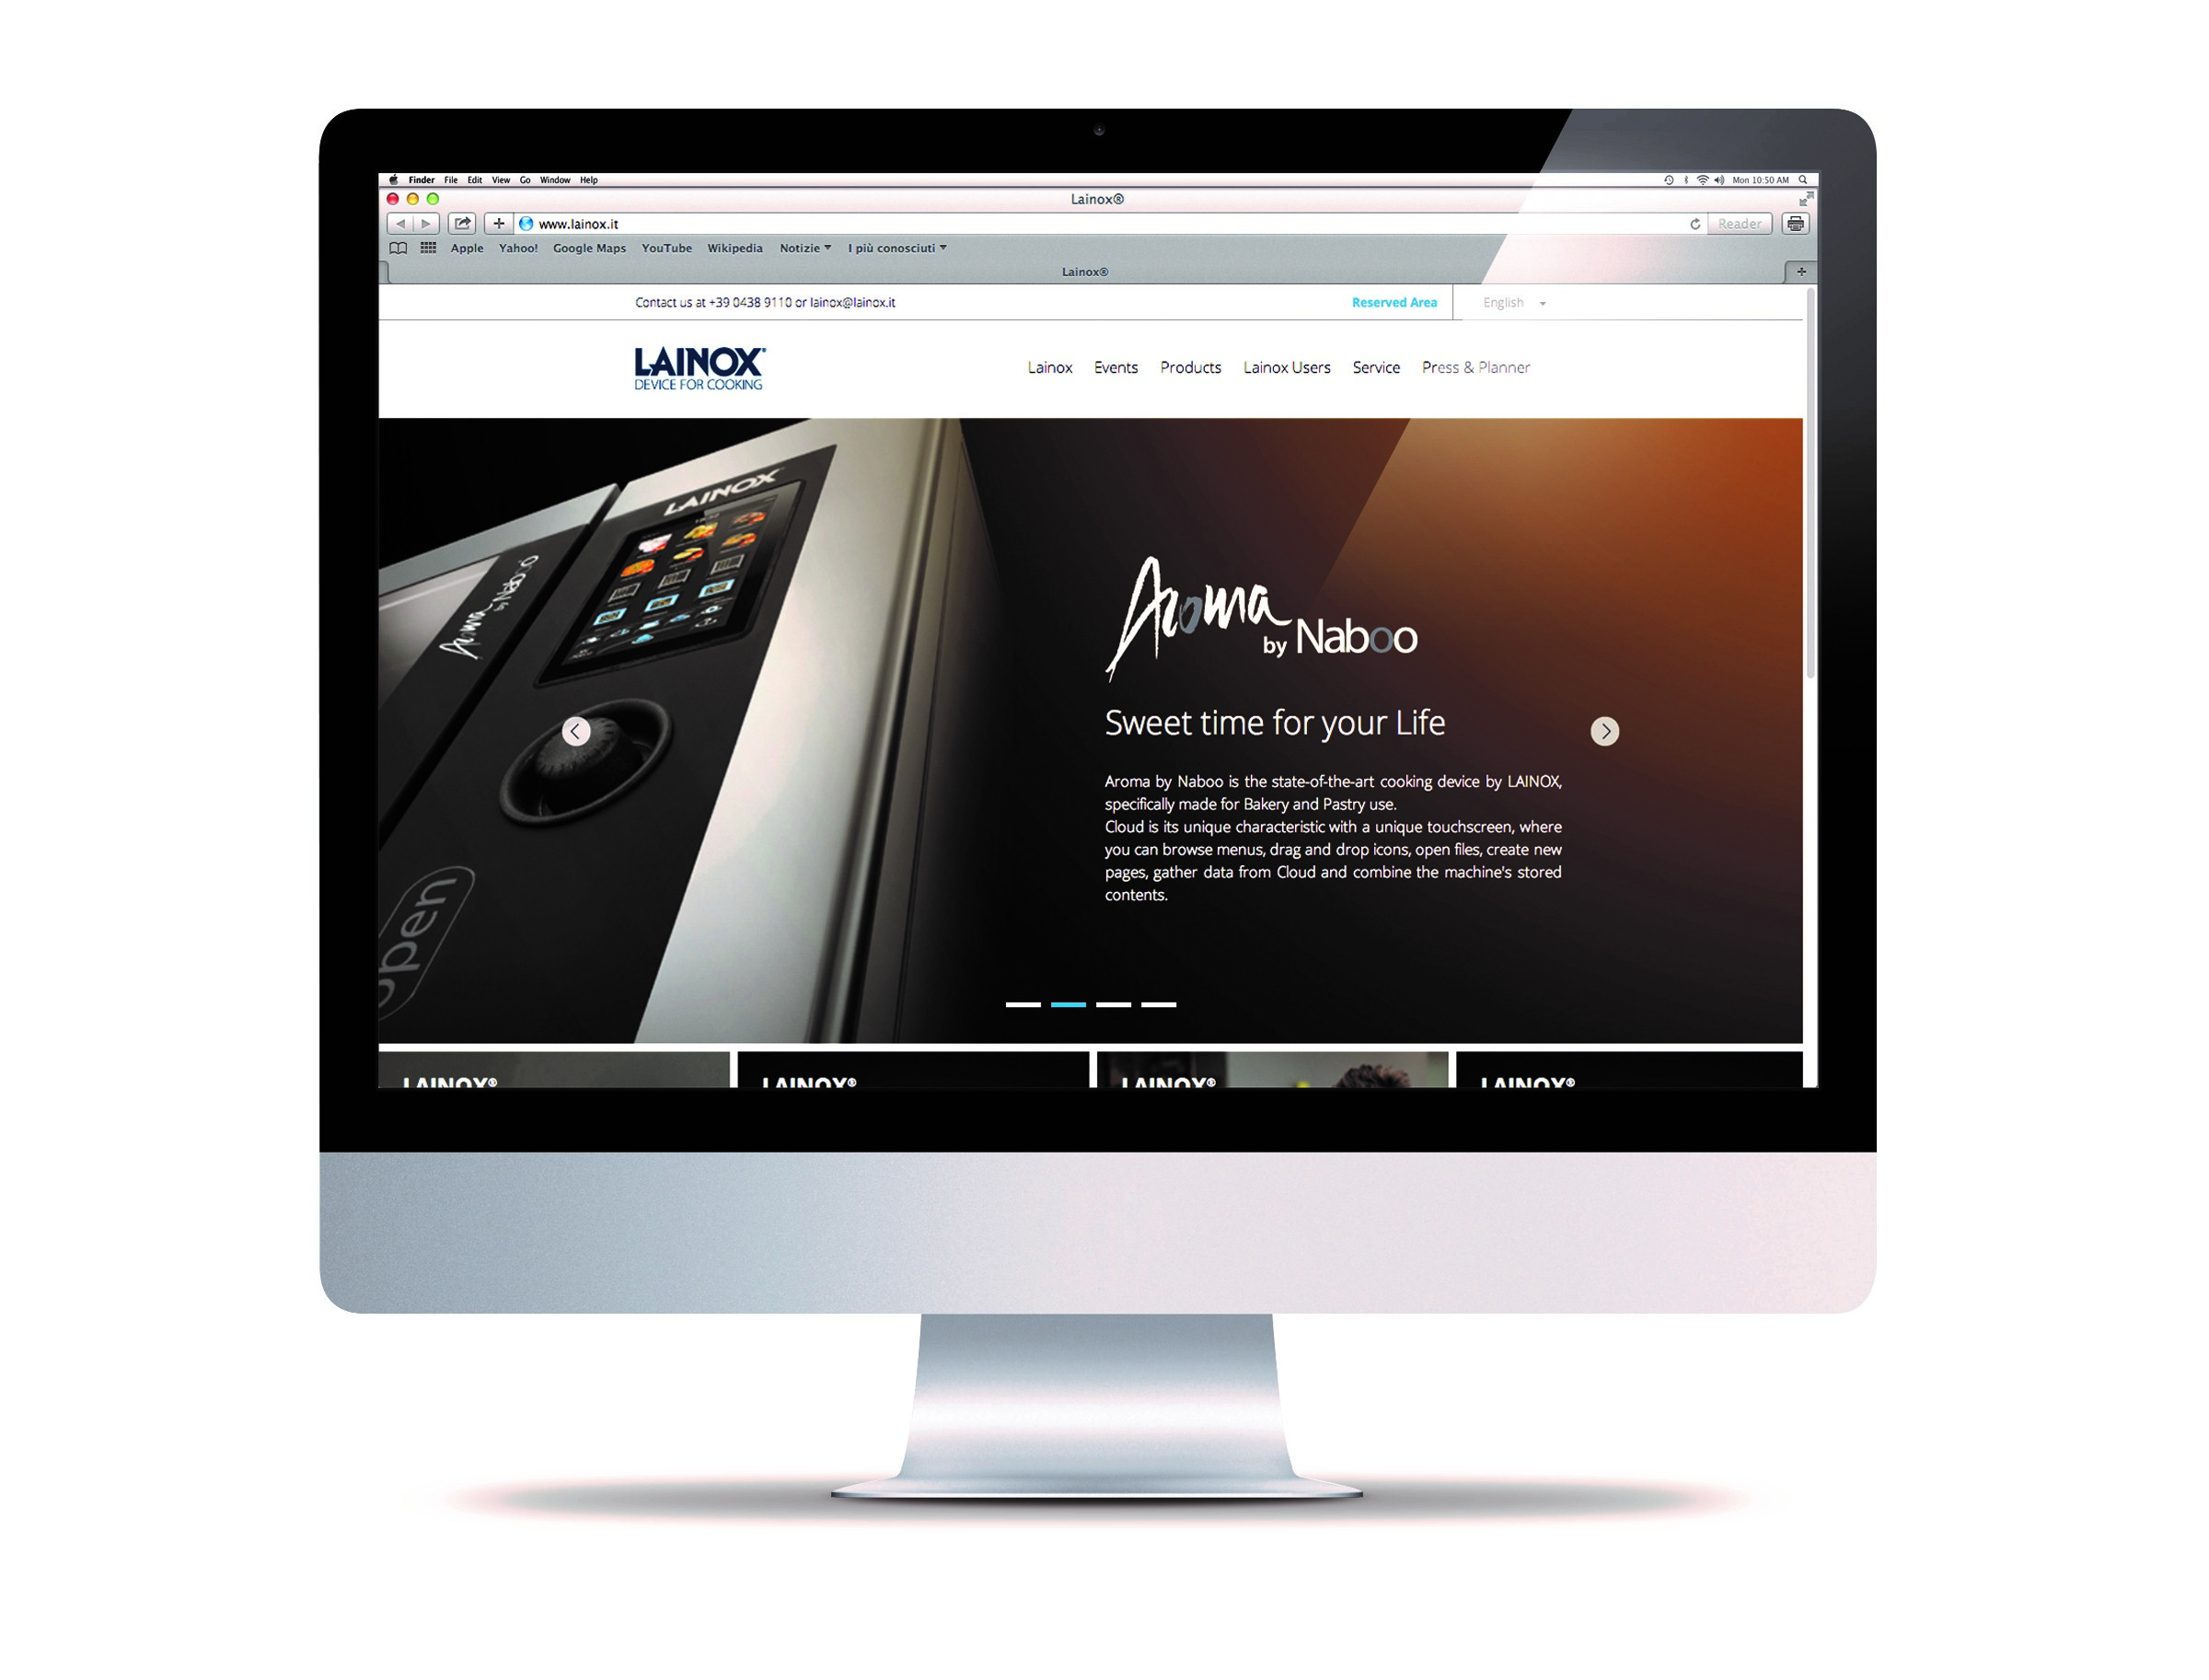 Lainox revamps its web look